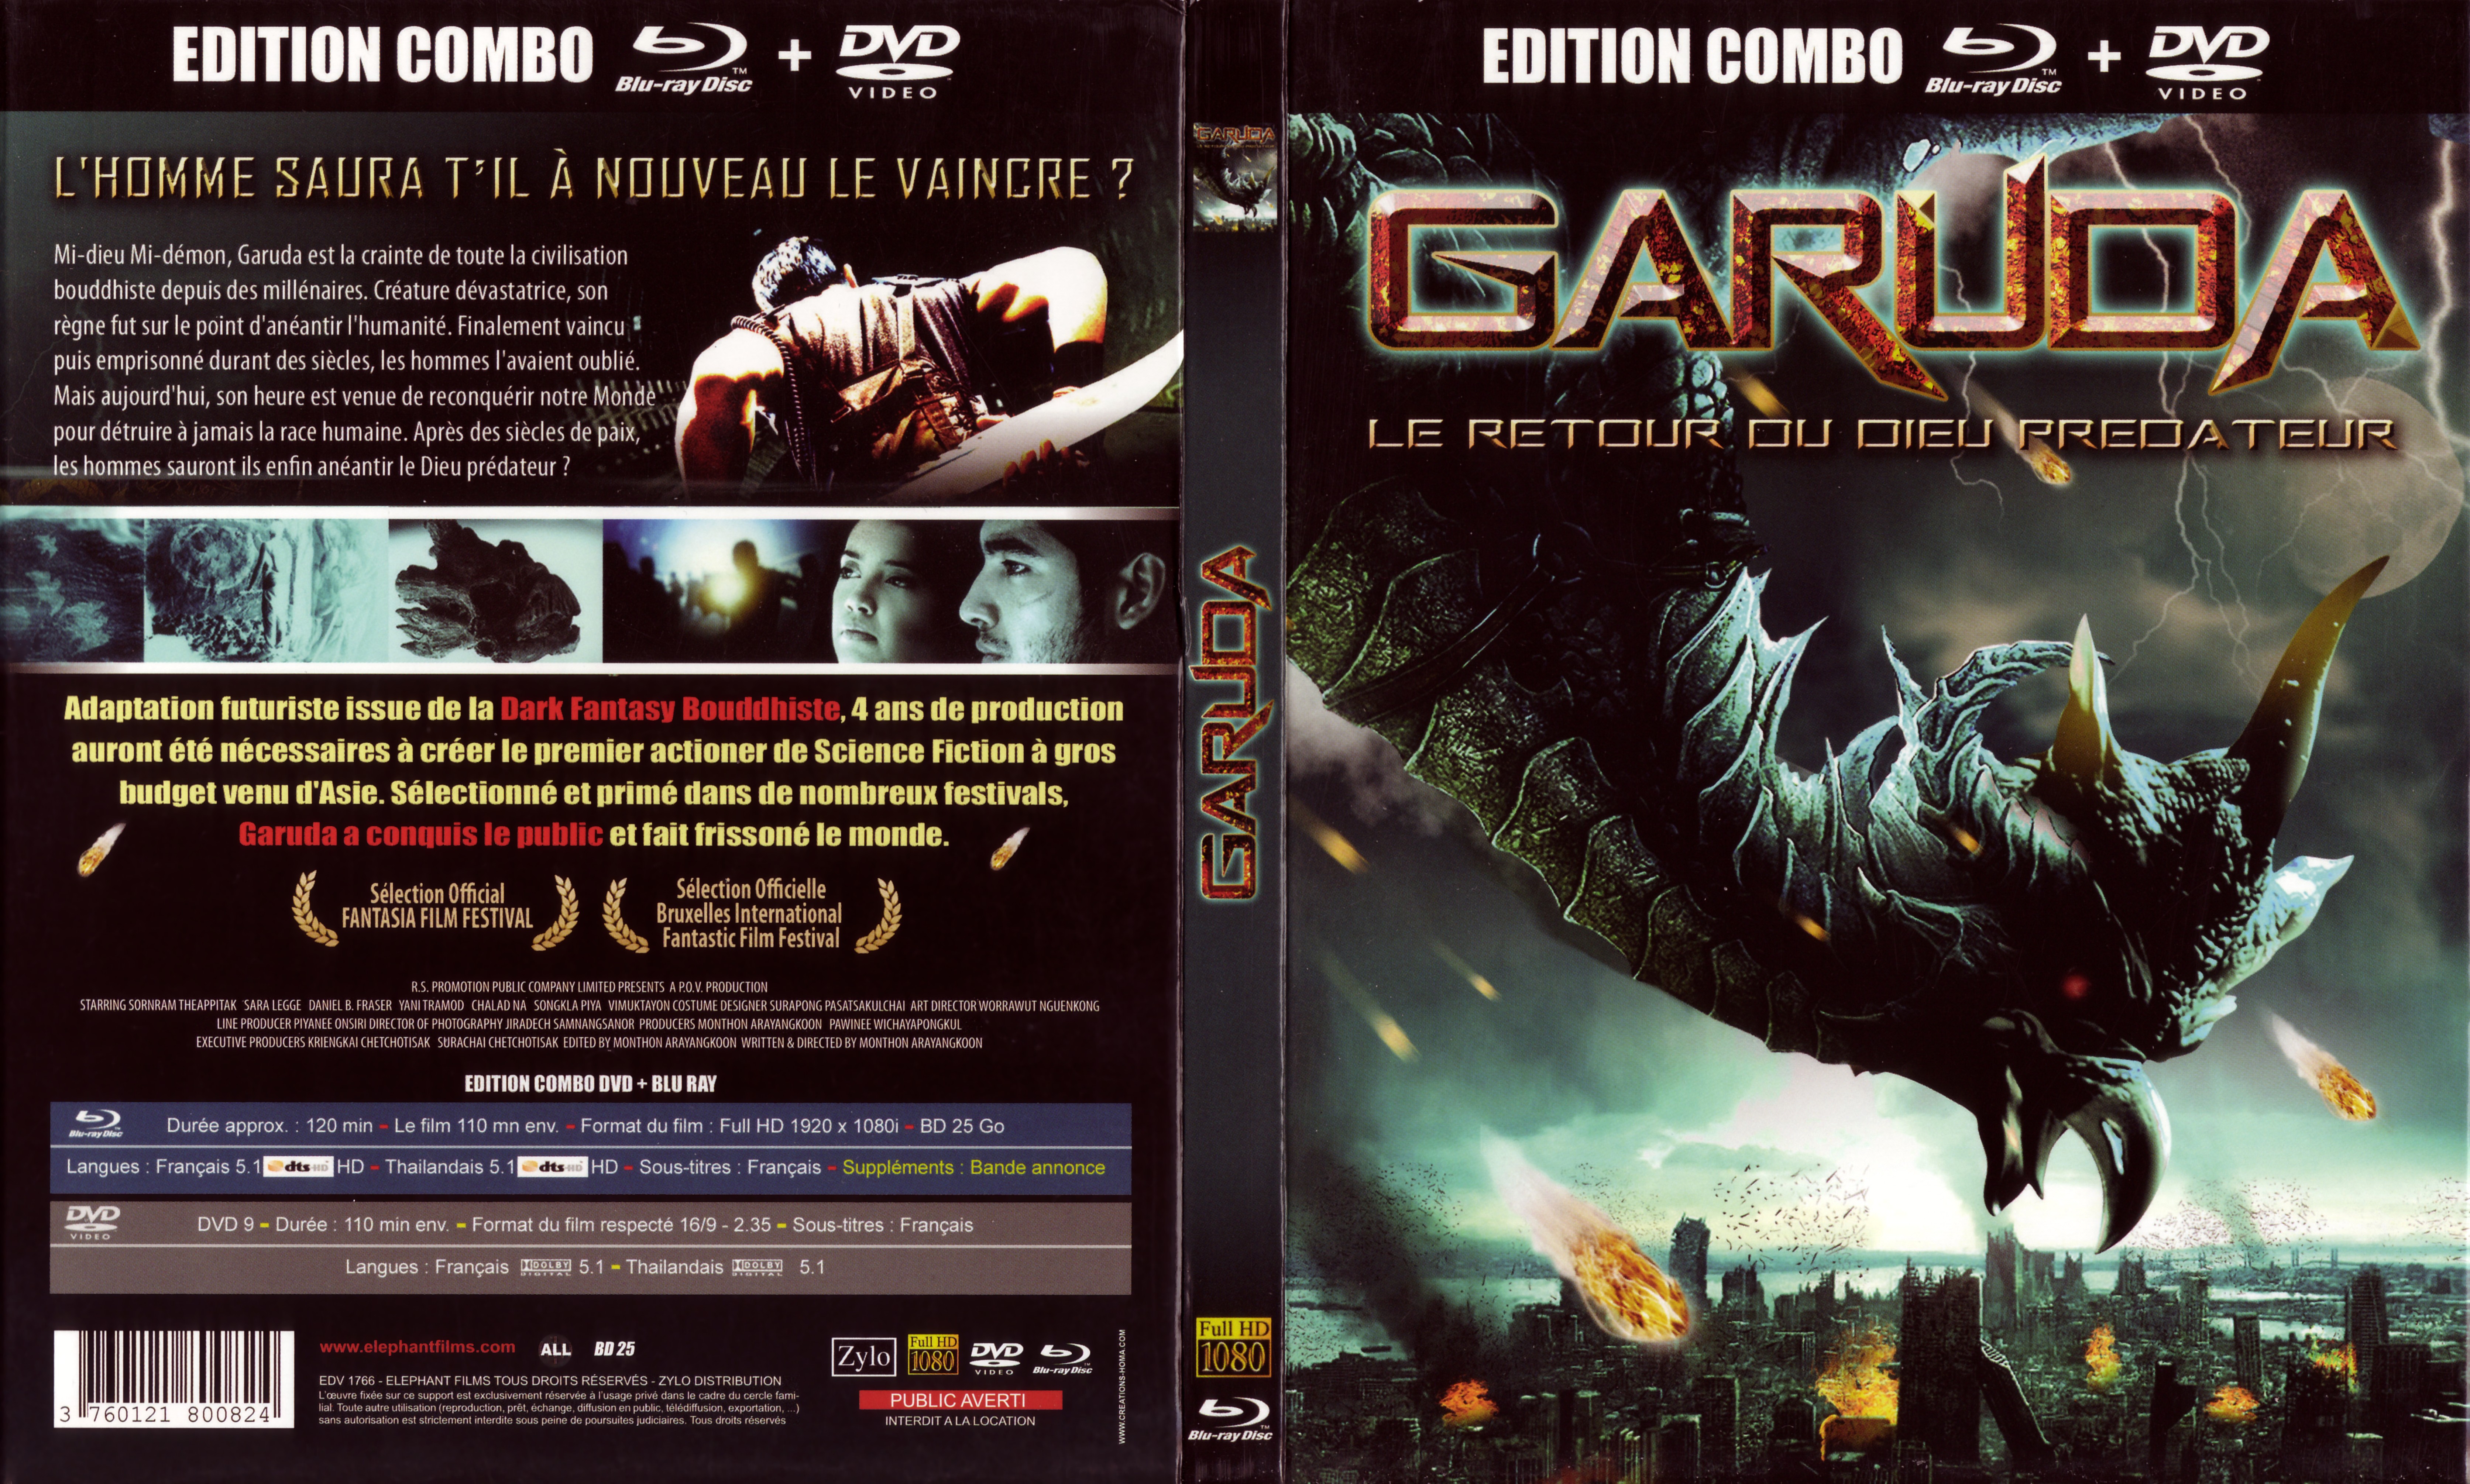 Jaquette DVD Garuda (BLU-RAY) v3